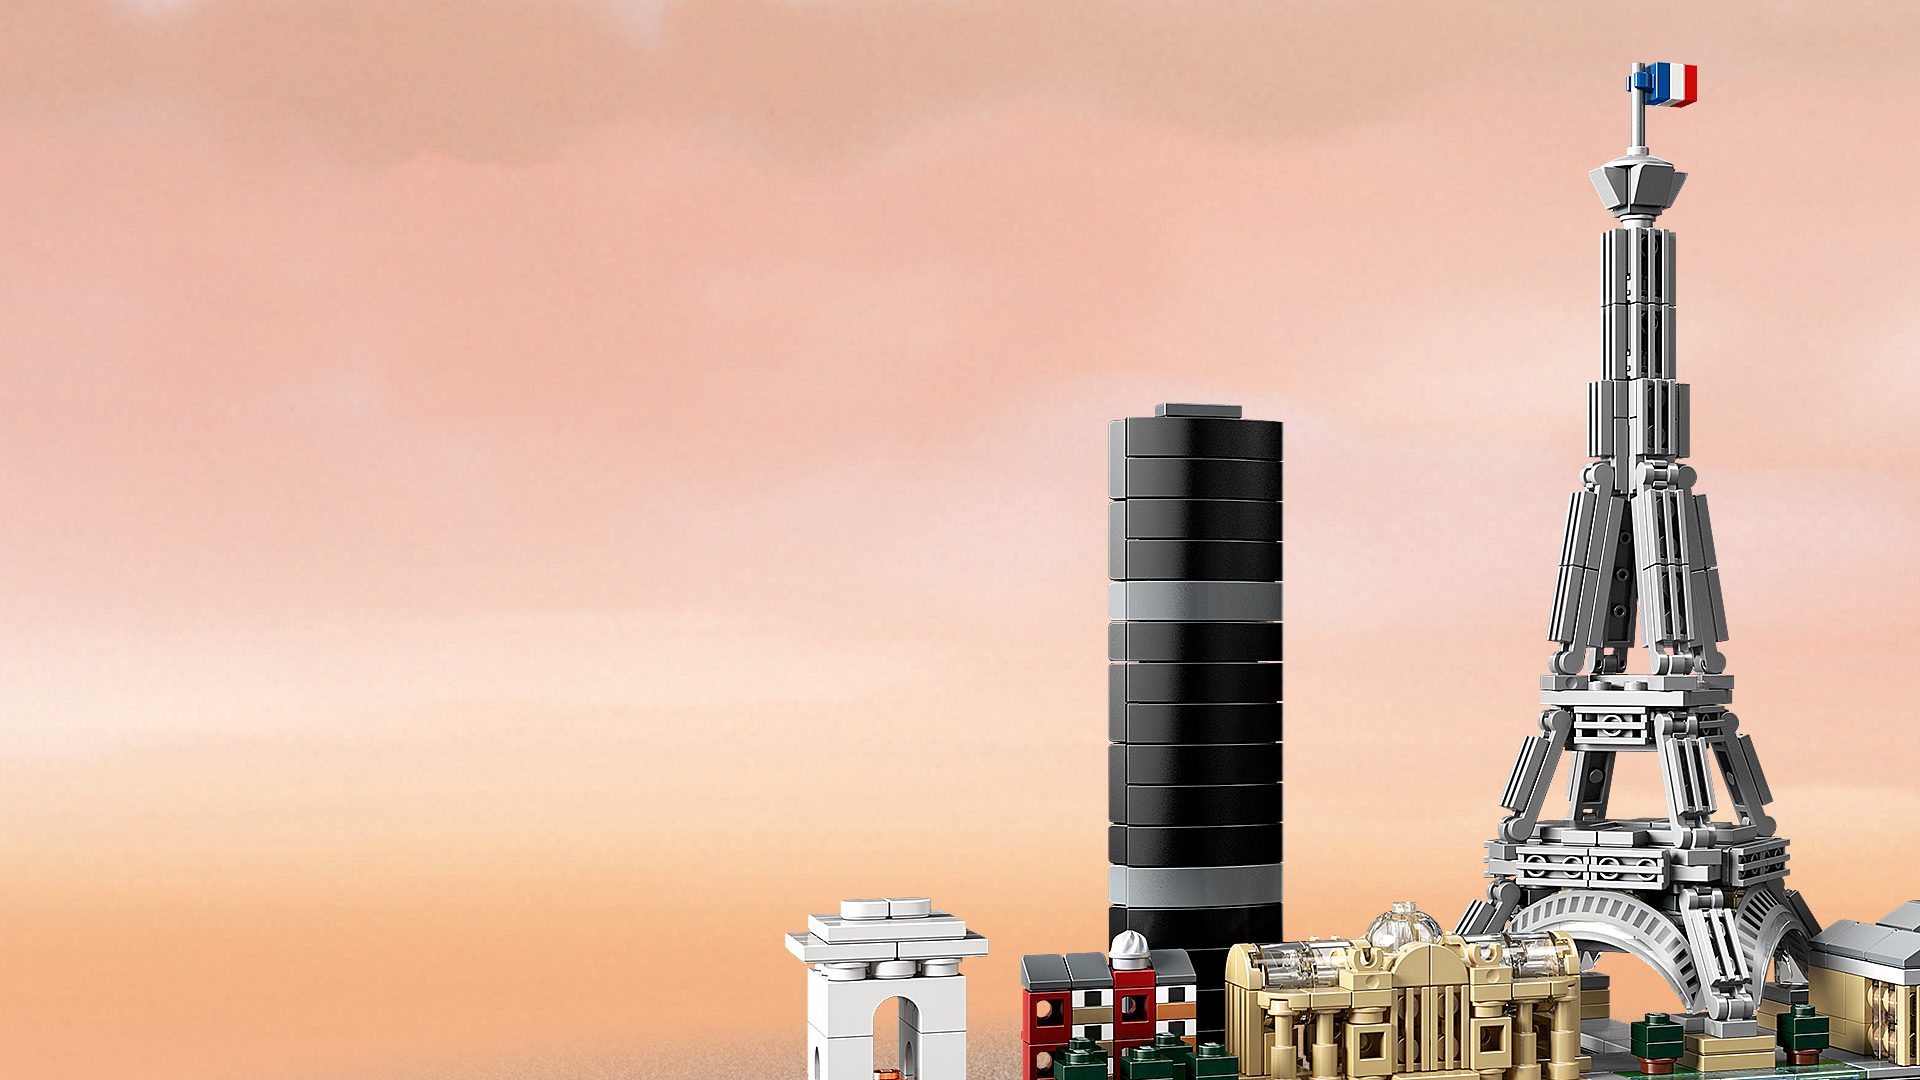 lego city backdrop